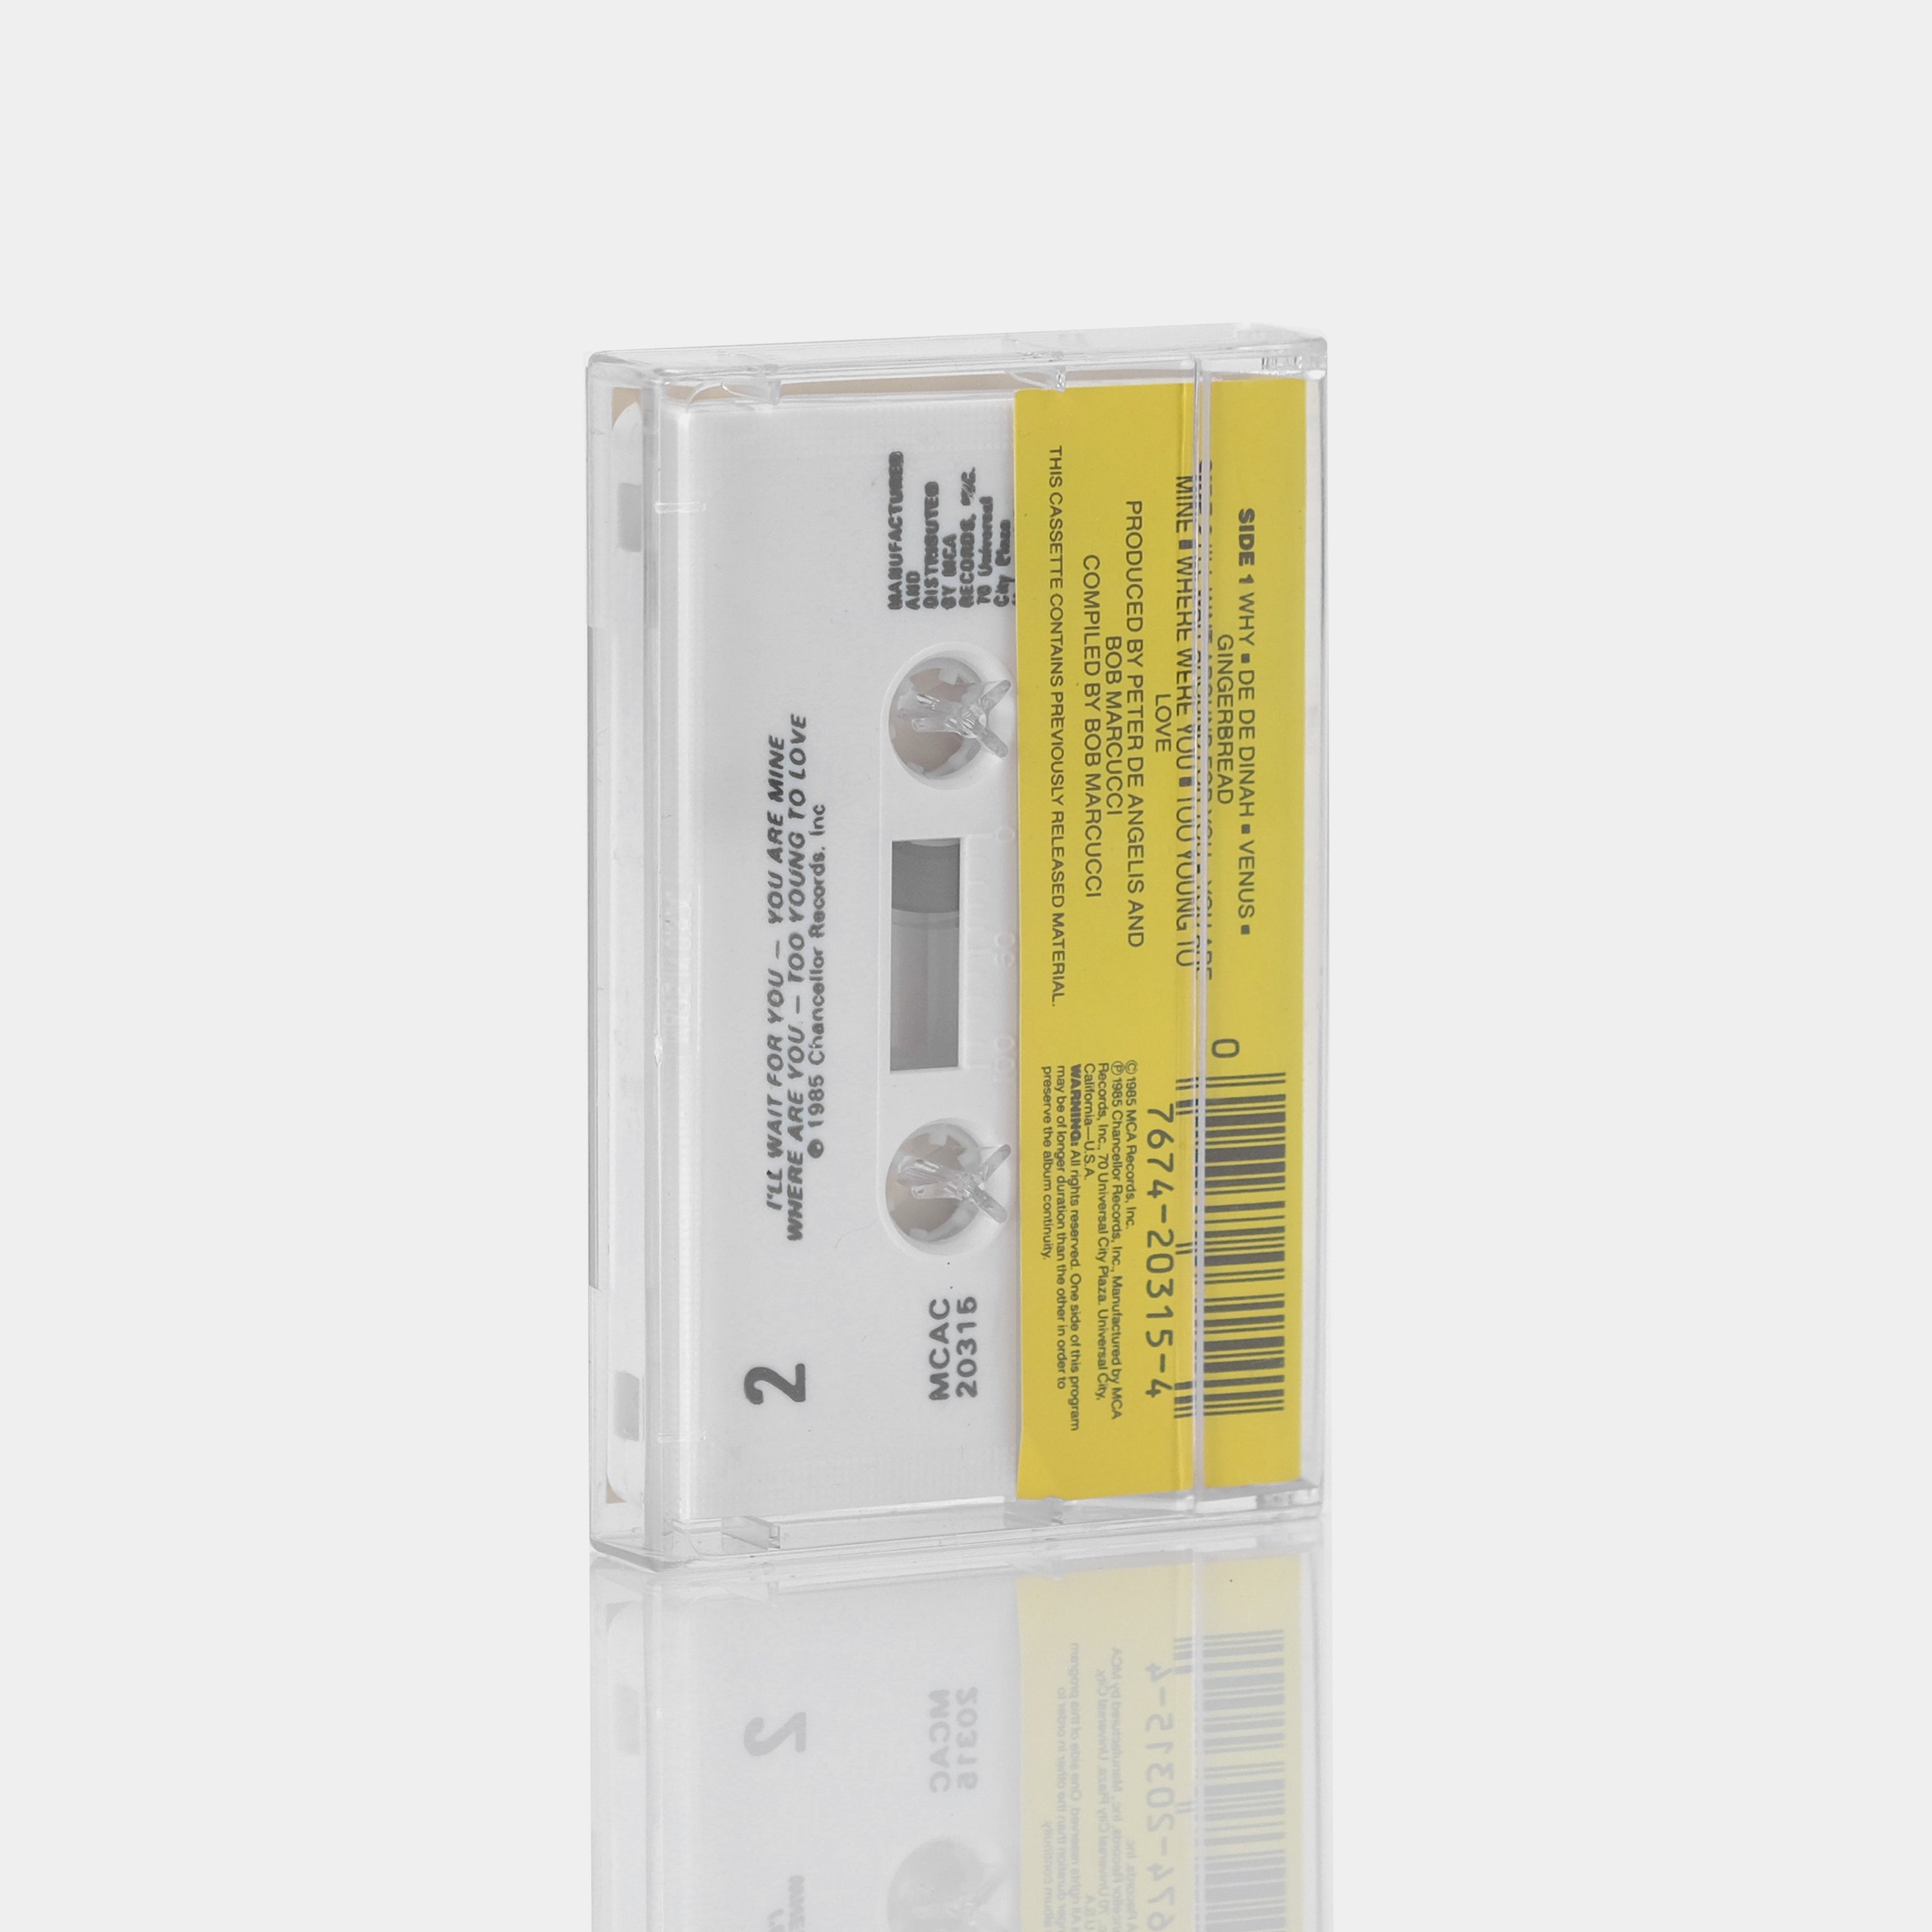 Frankie Avalon - Venus Cassette Tape